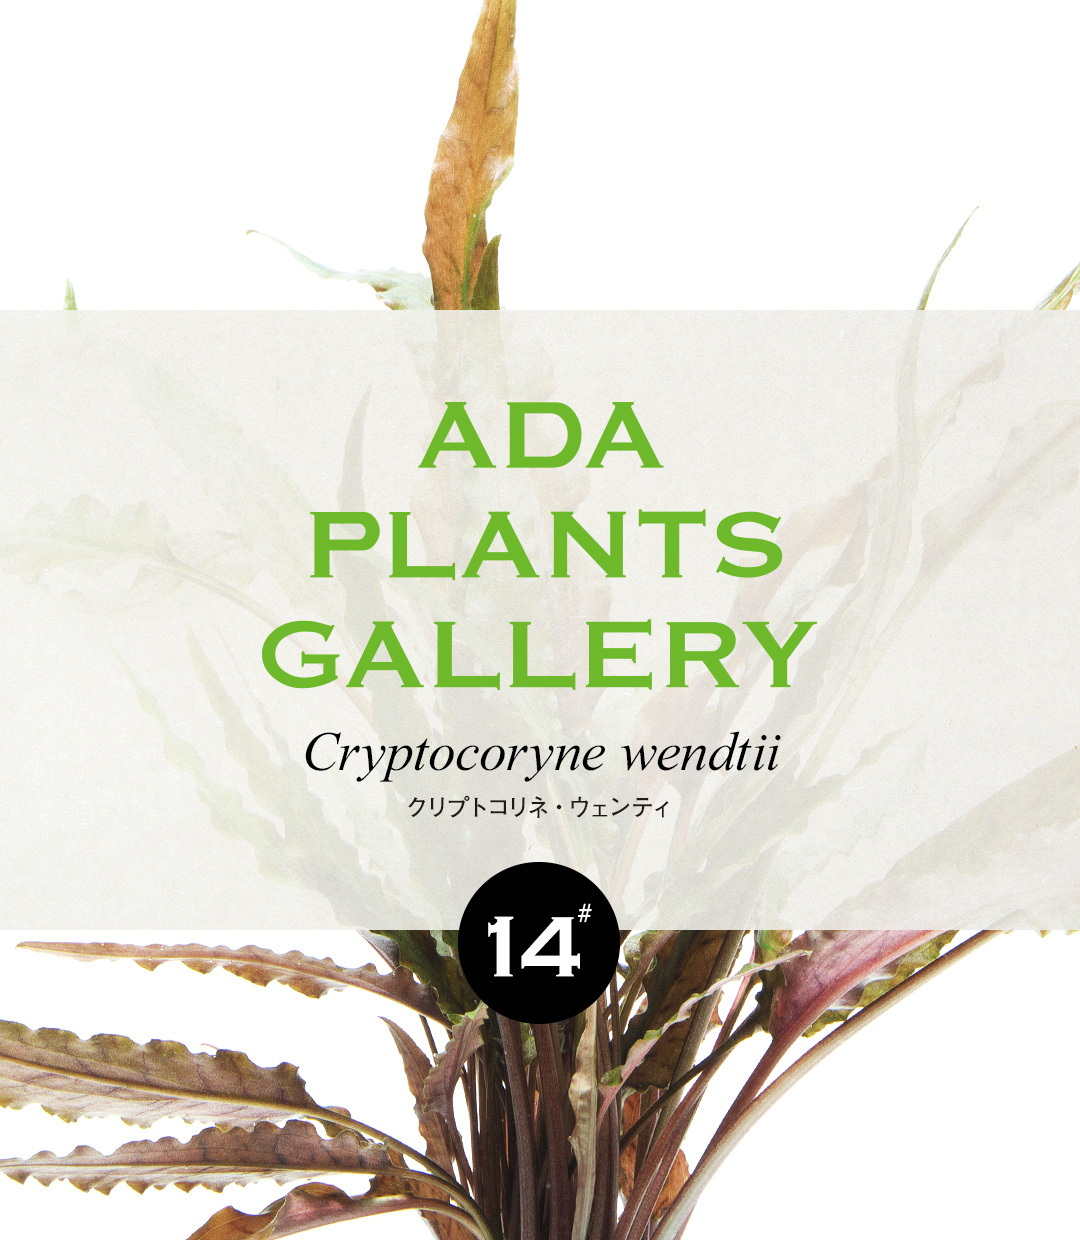 ADA PLANTS GALLERY #14 「クリプトコリネ・ウェンティ」